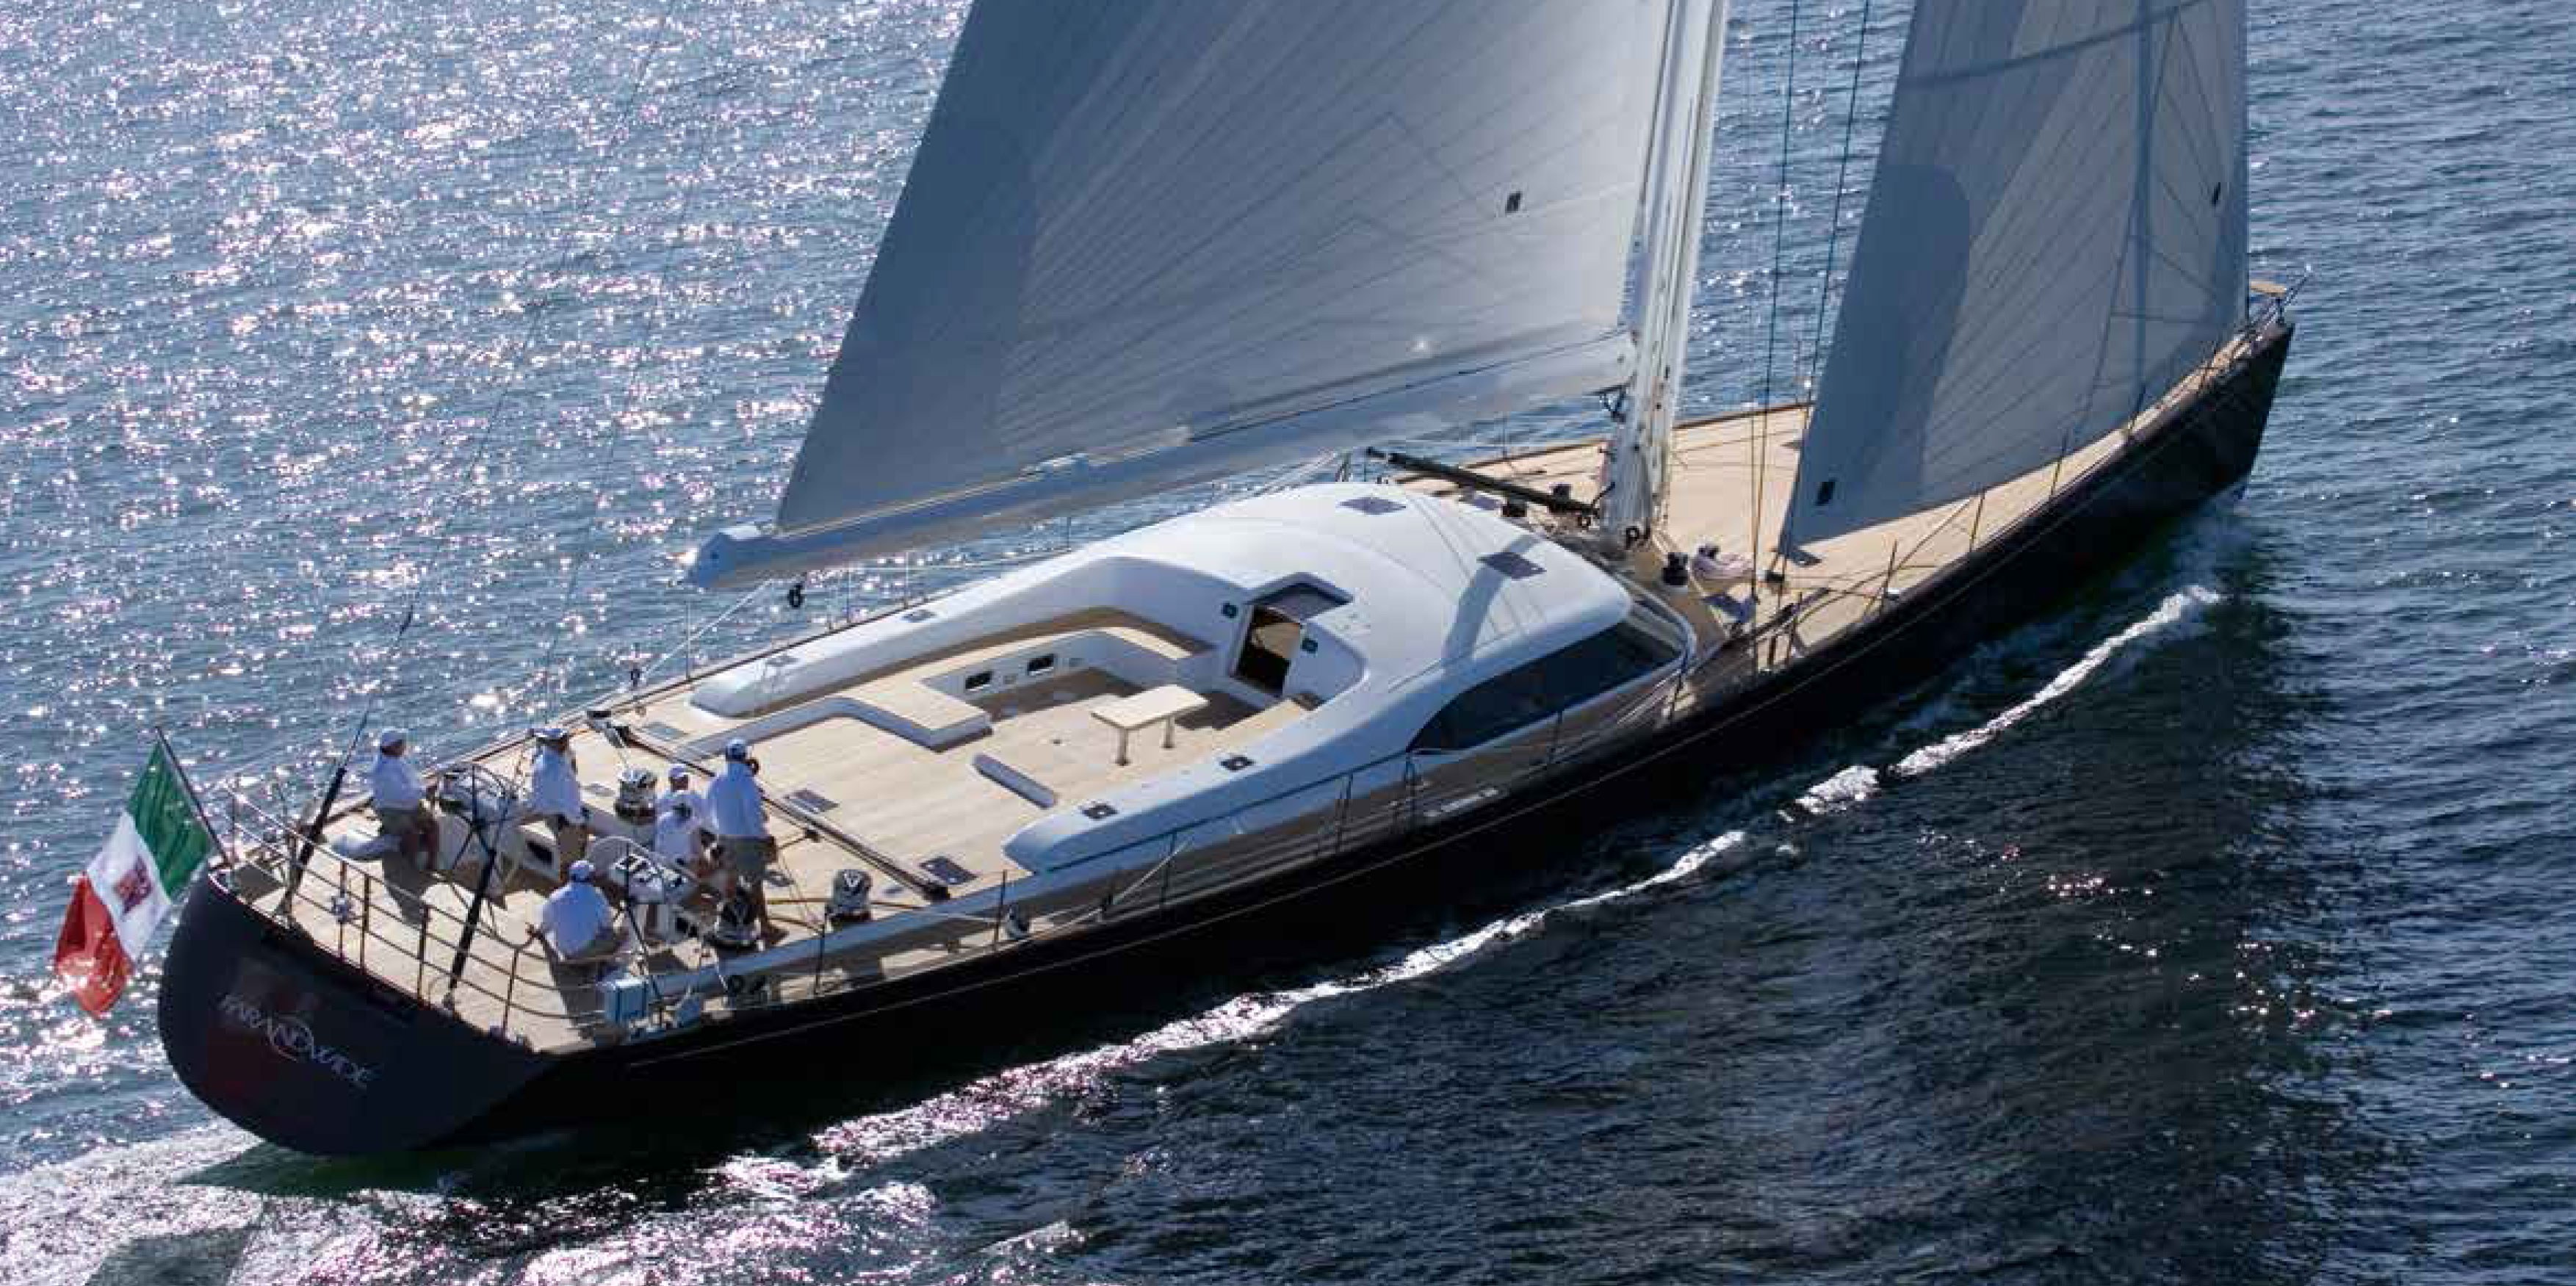 Luxury Sailboat